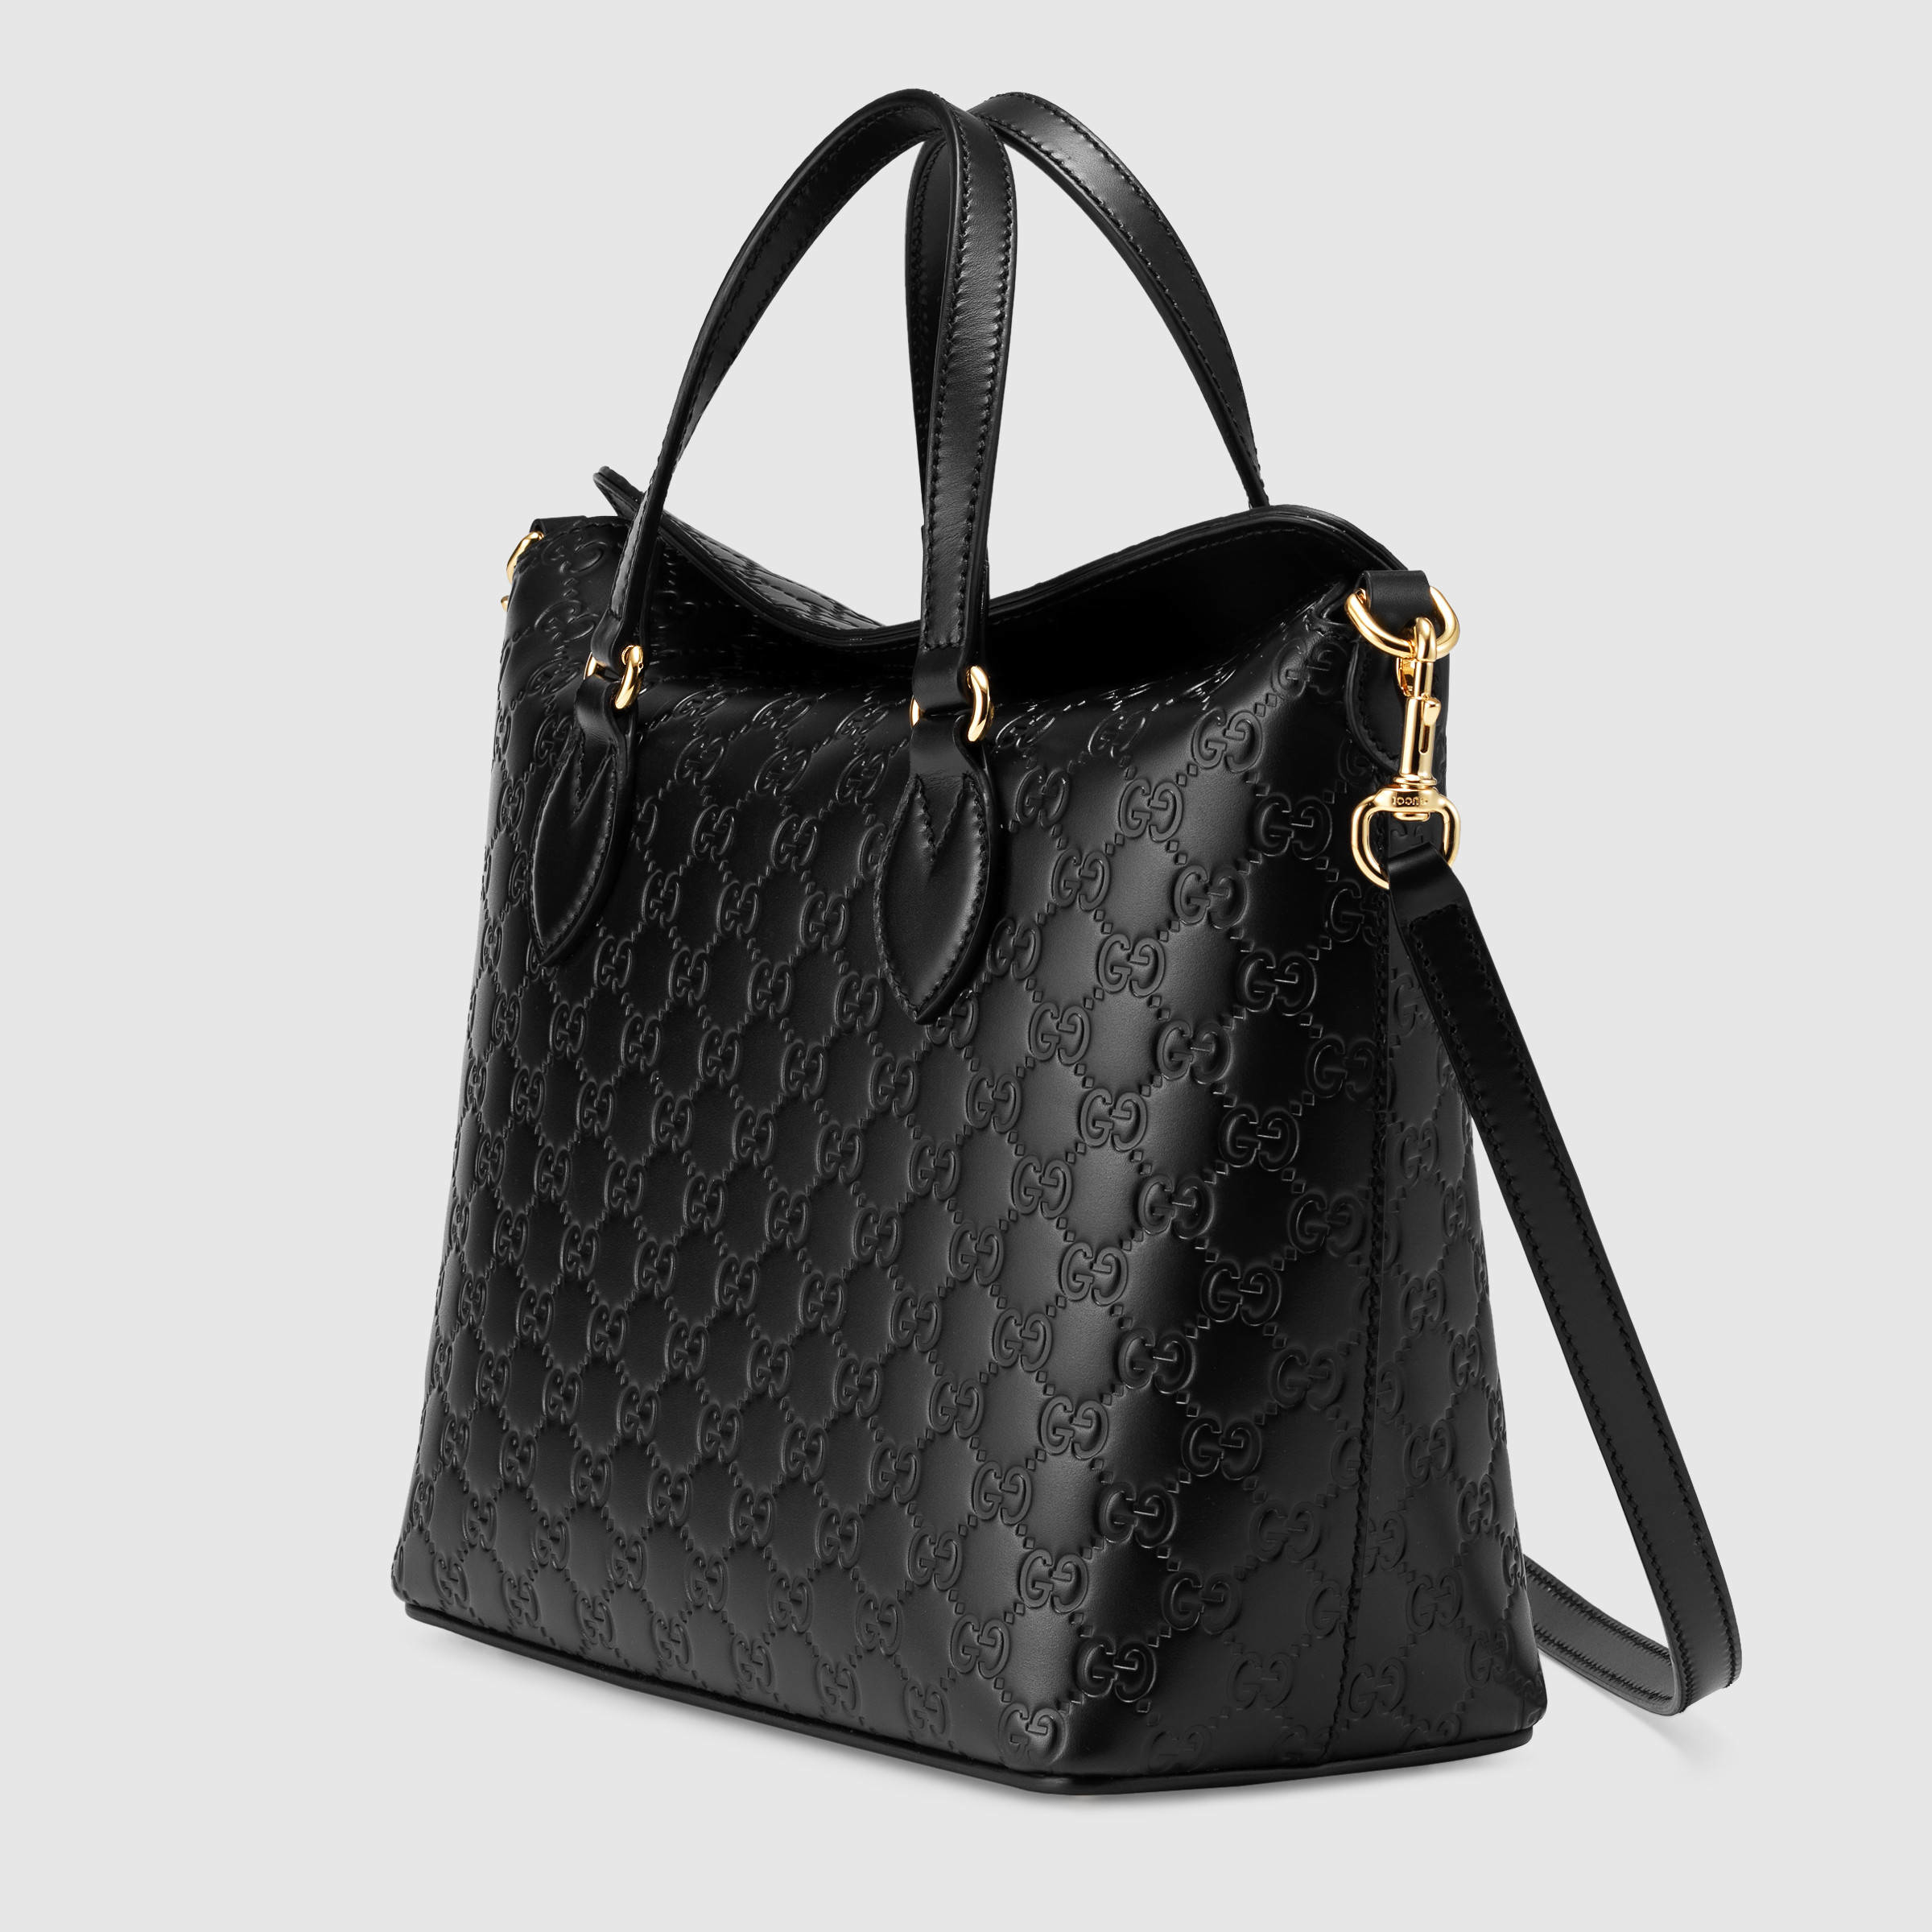 Gucci Signature Leather Shoulder Bag in Black | Lyst